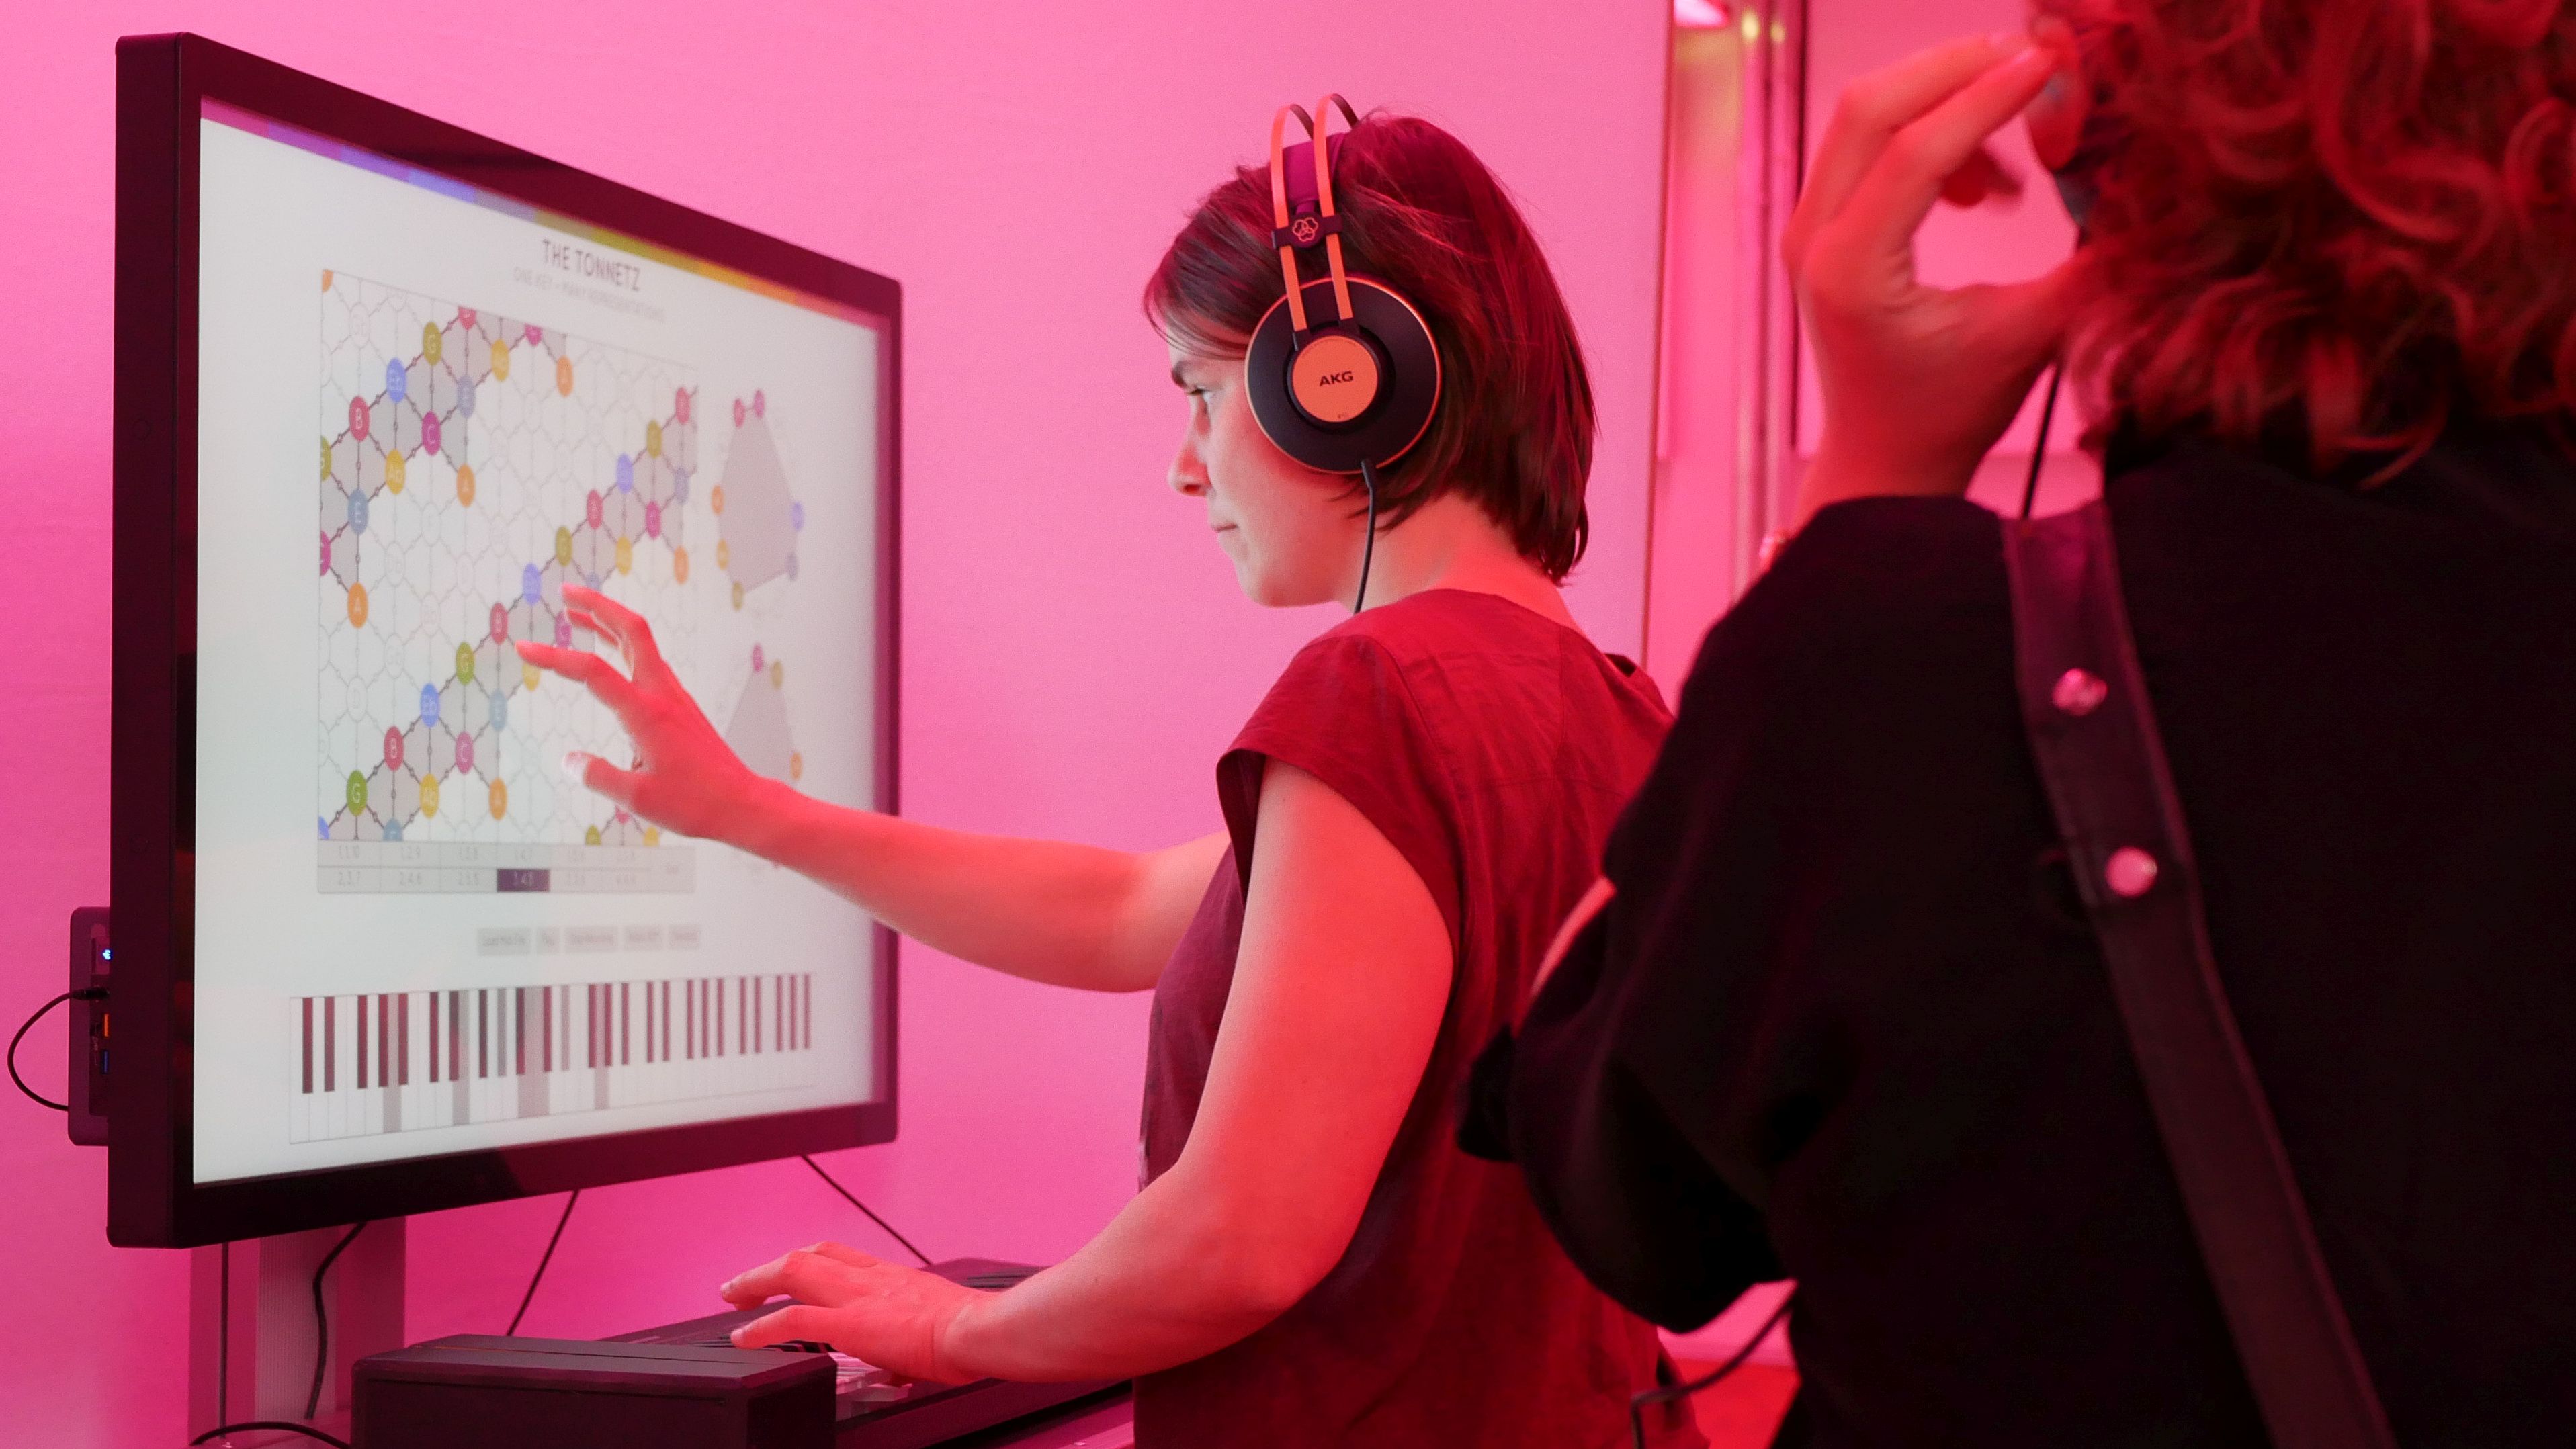 A woman touches a screen in the exhibition "La La Lab - The Mathematics of Music".